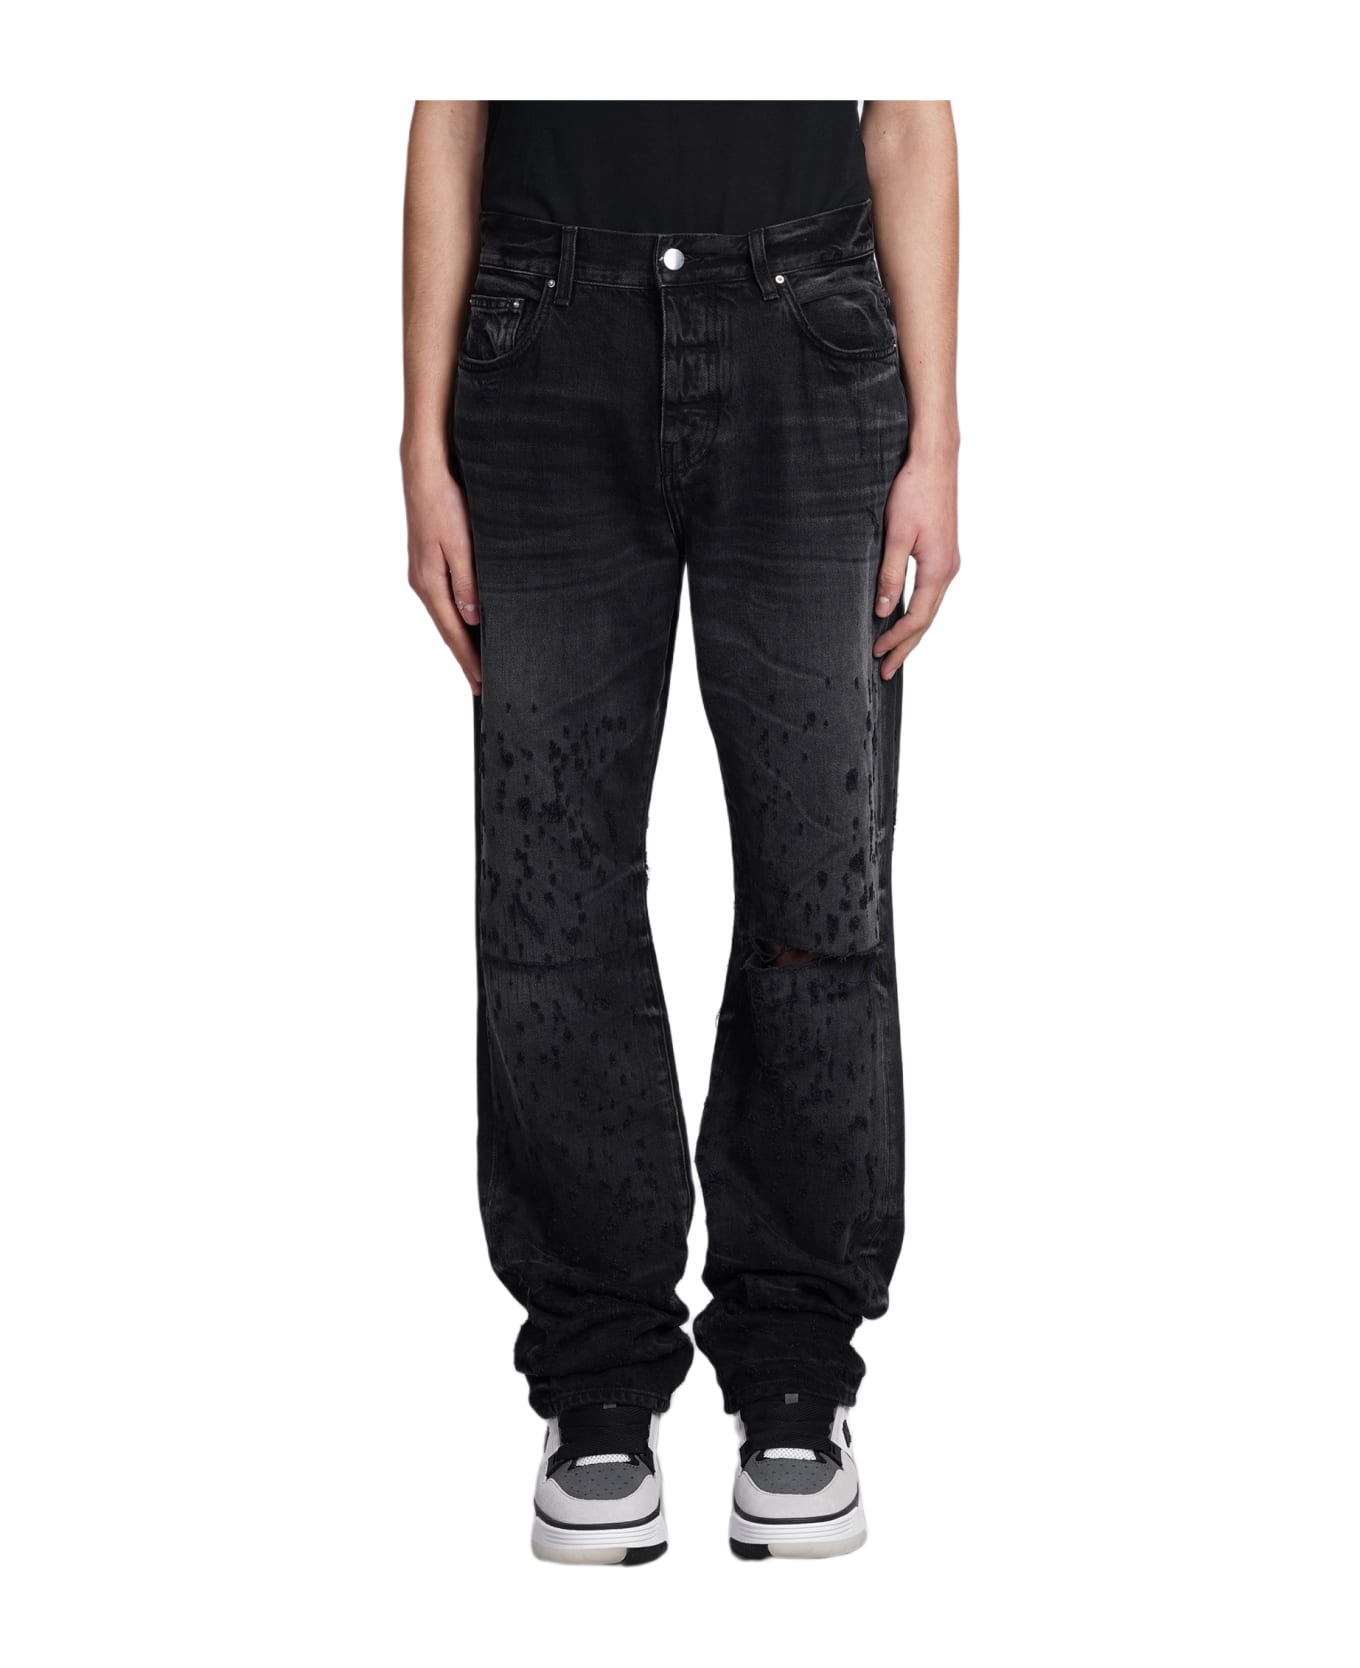 AMIRI Jeans In Black Cotton - Black デニム